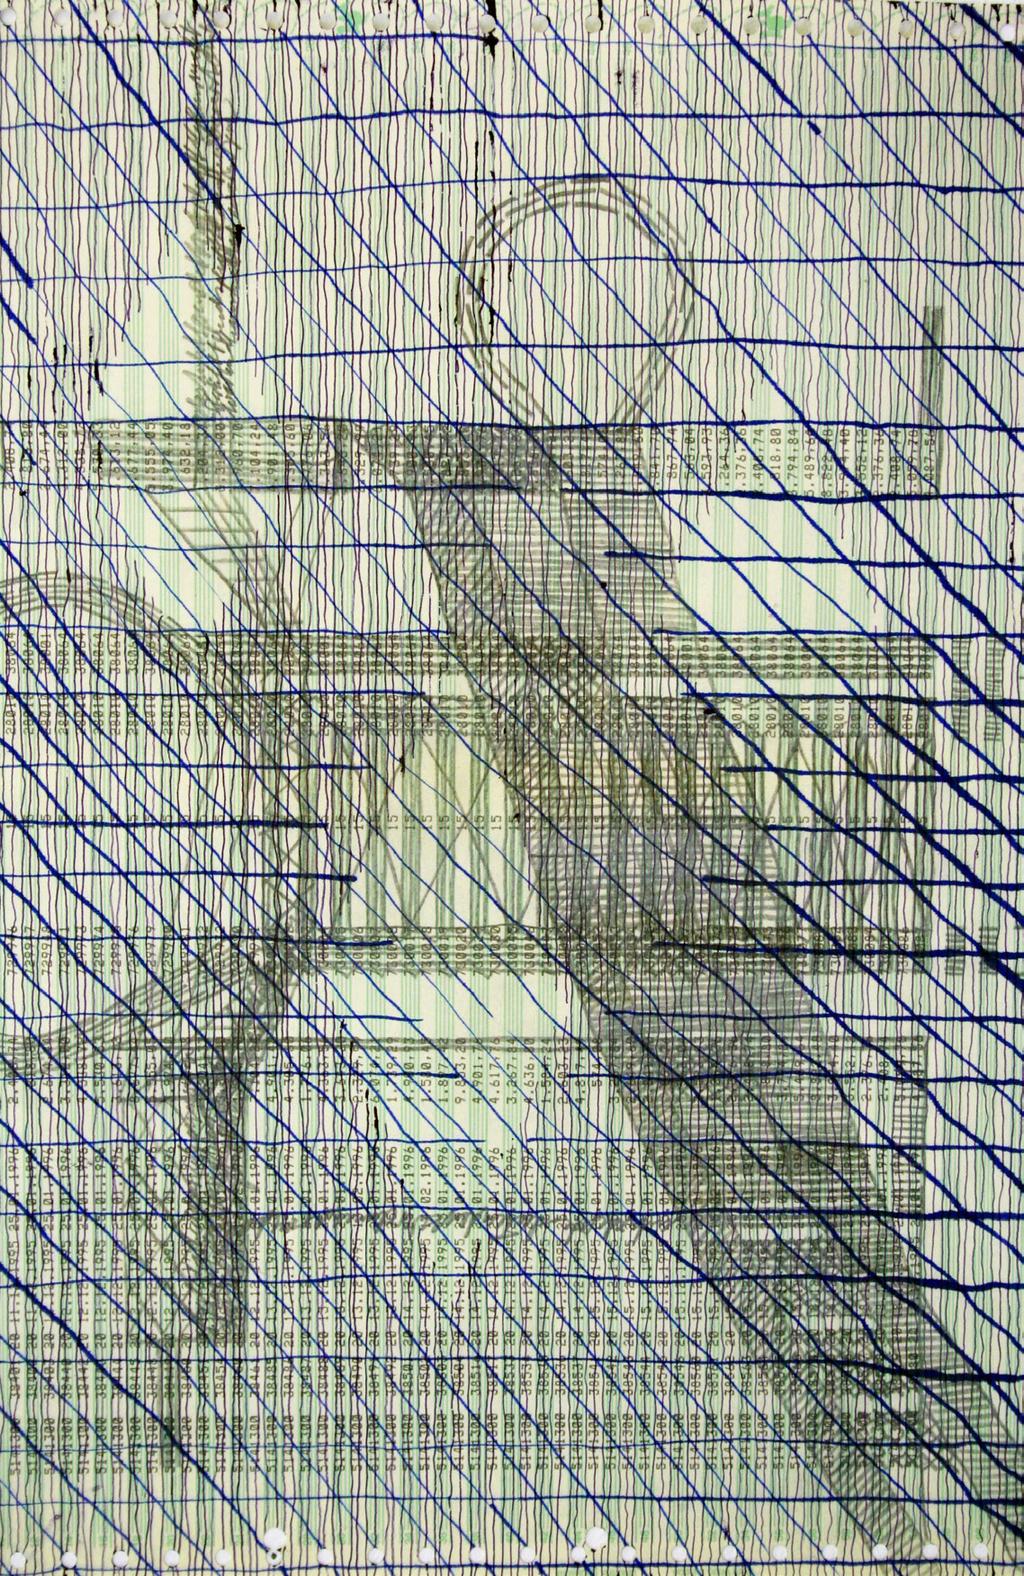 o.t. 2015, 37,9 x 30,7 cm, Bleistift,